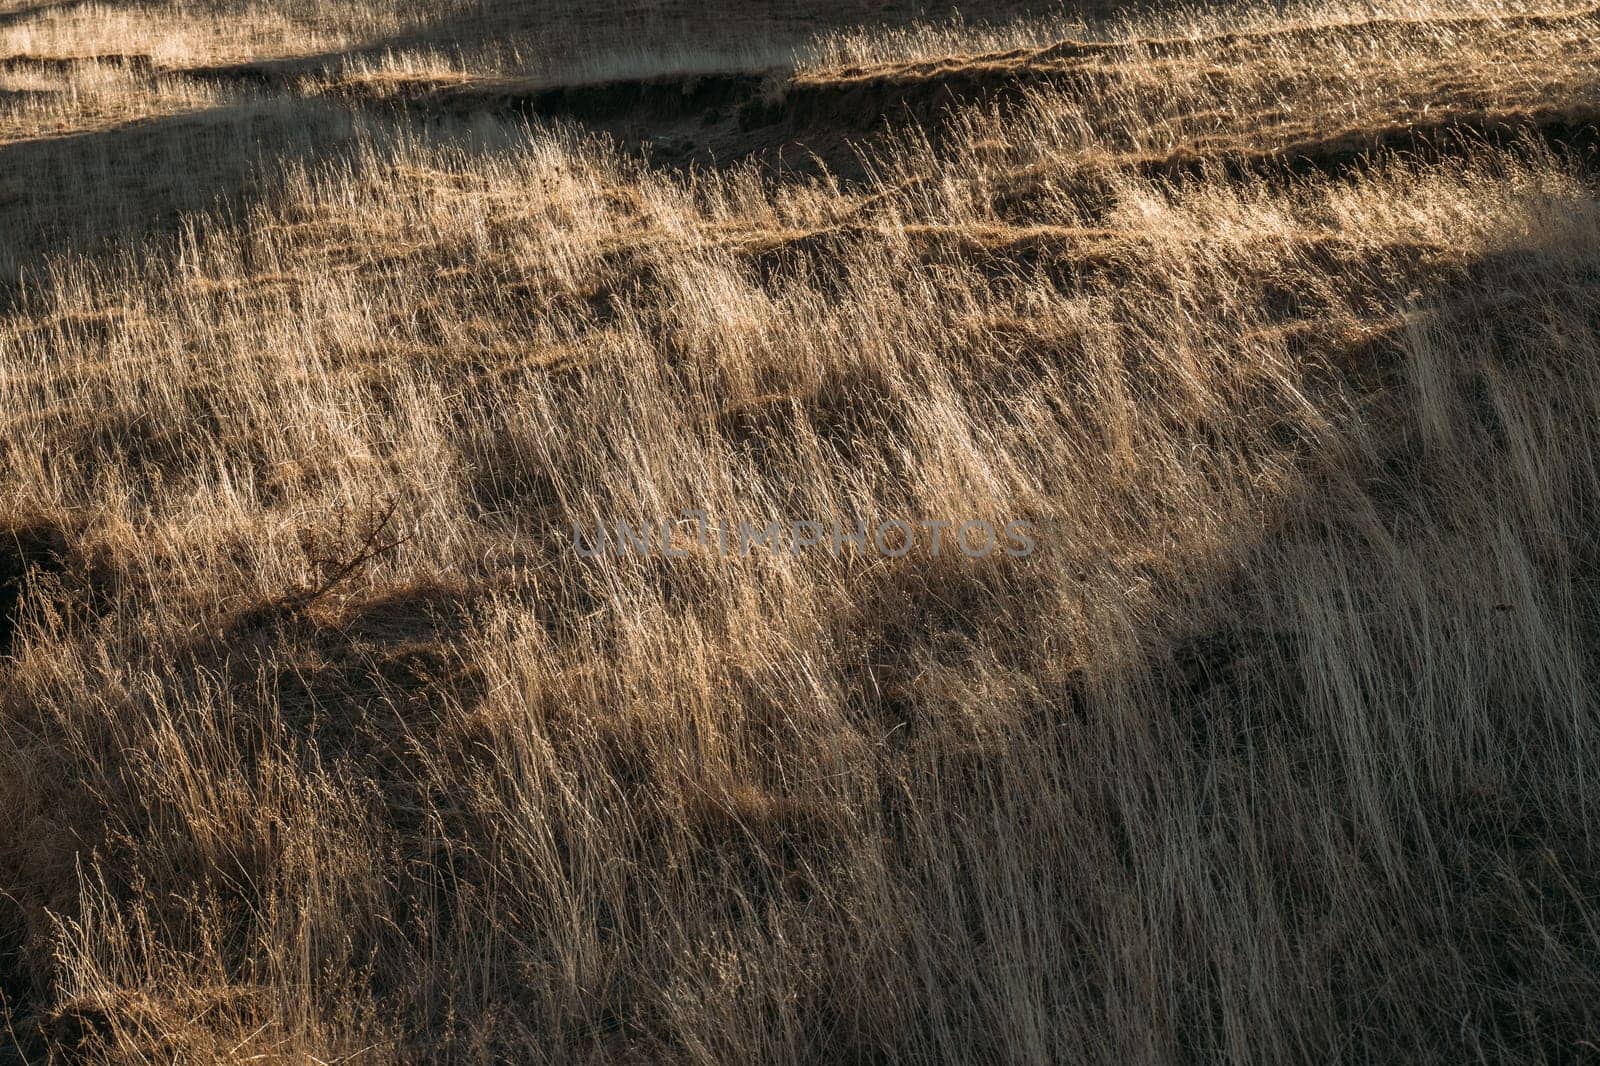 Golden Hour Sunlight Casting Shadows on Textured Grassland by apavlin